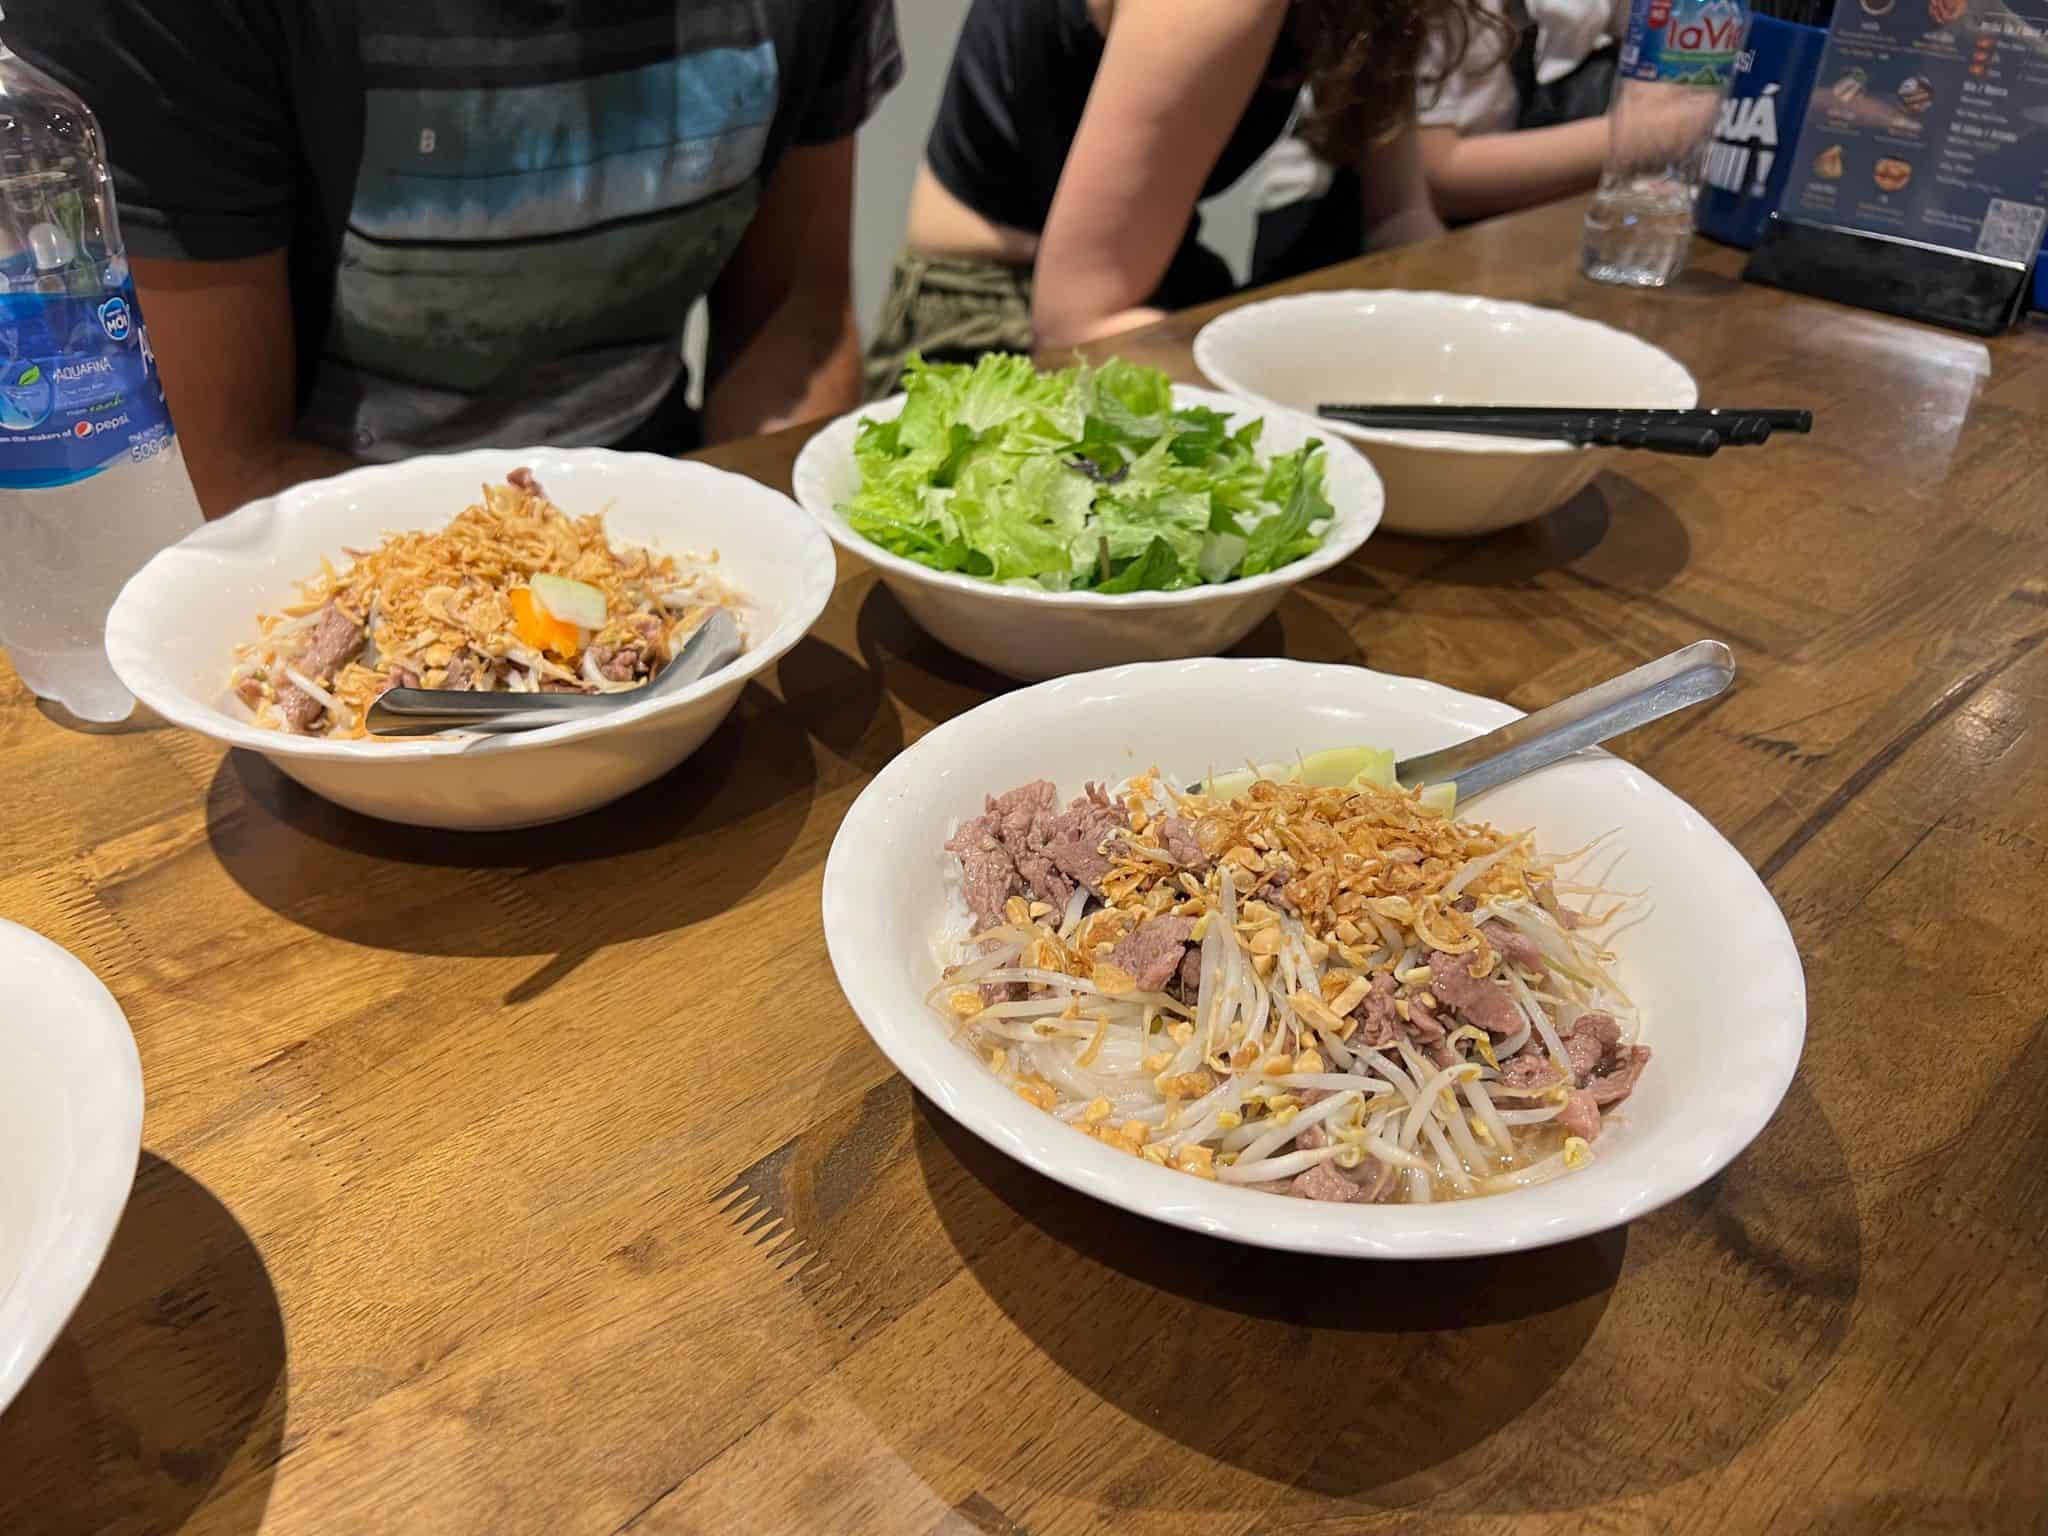 Bún bò Nam Bộ, vietnamese warm beef salad,  was the highlight  dish on our Hanoi street food tour